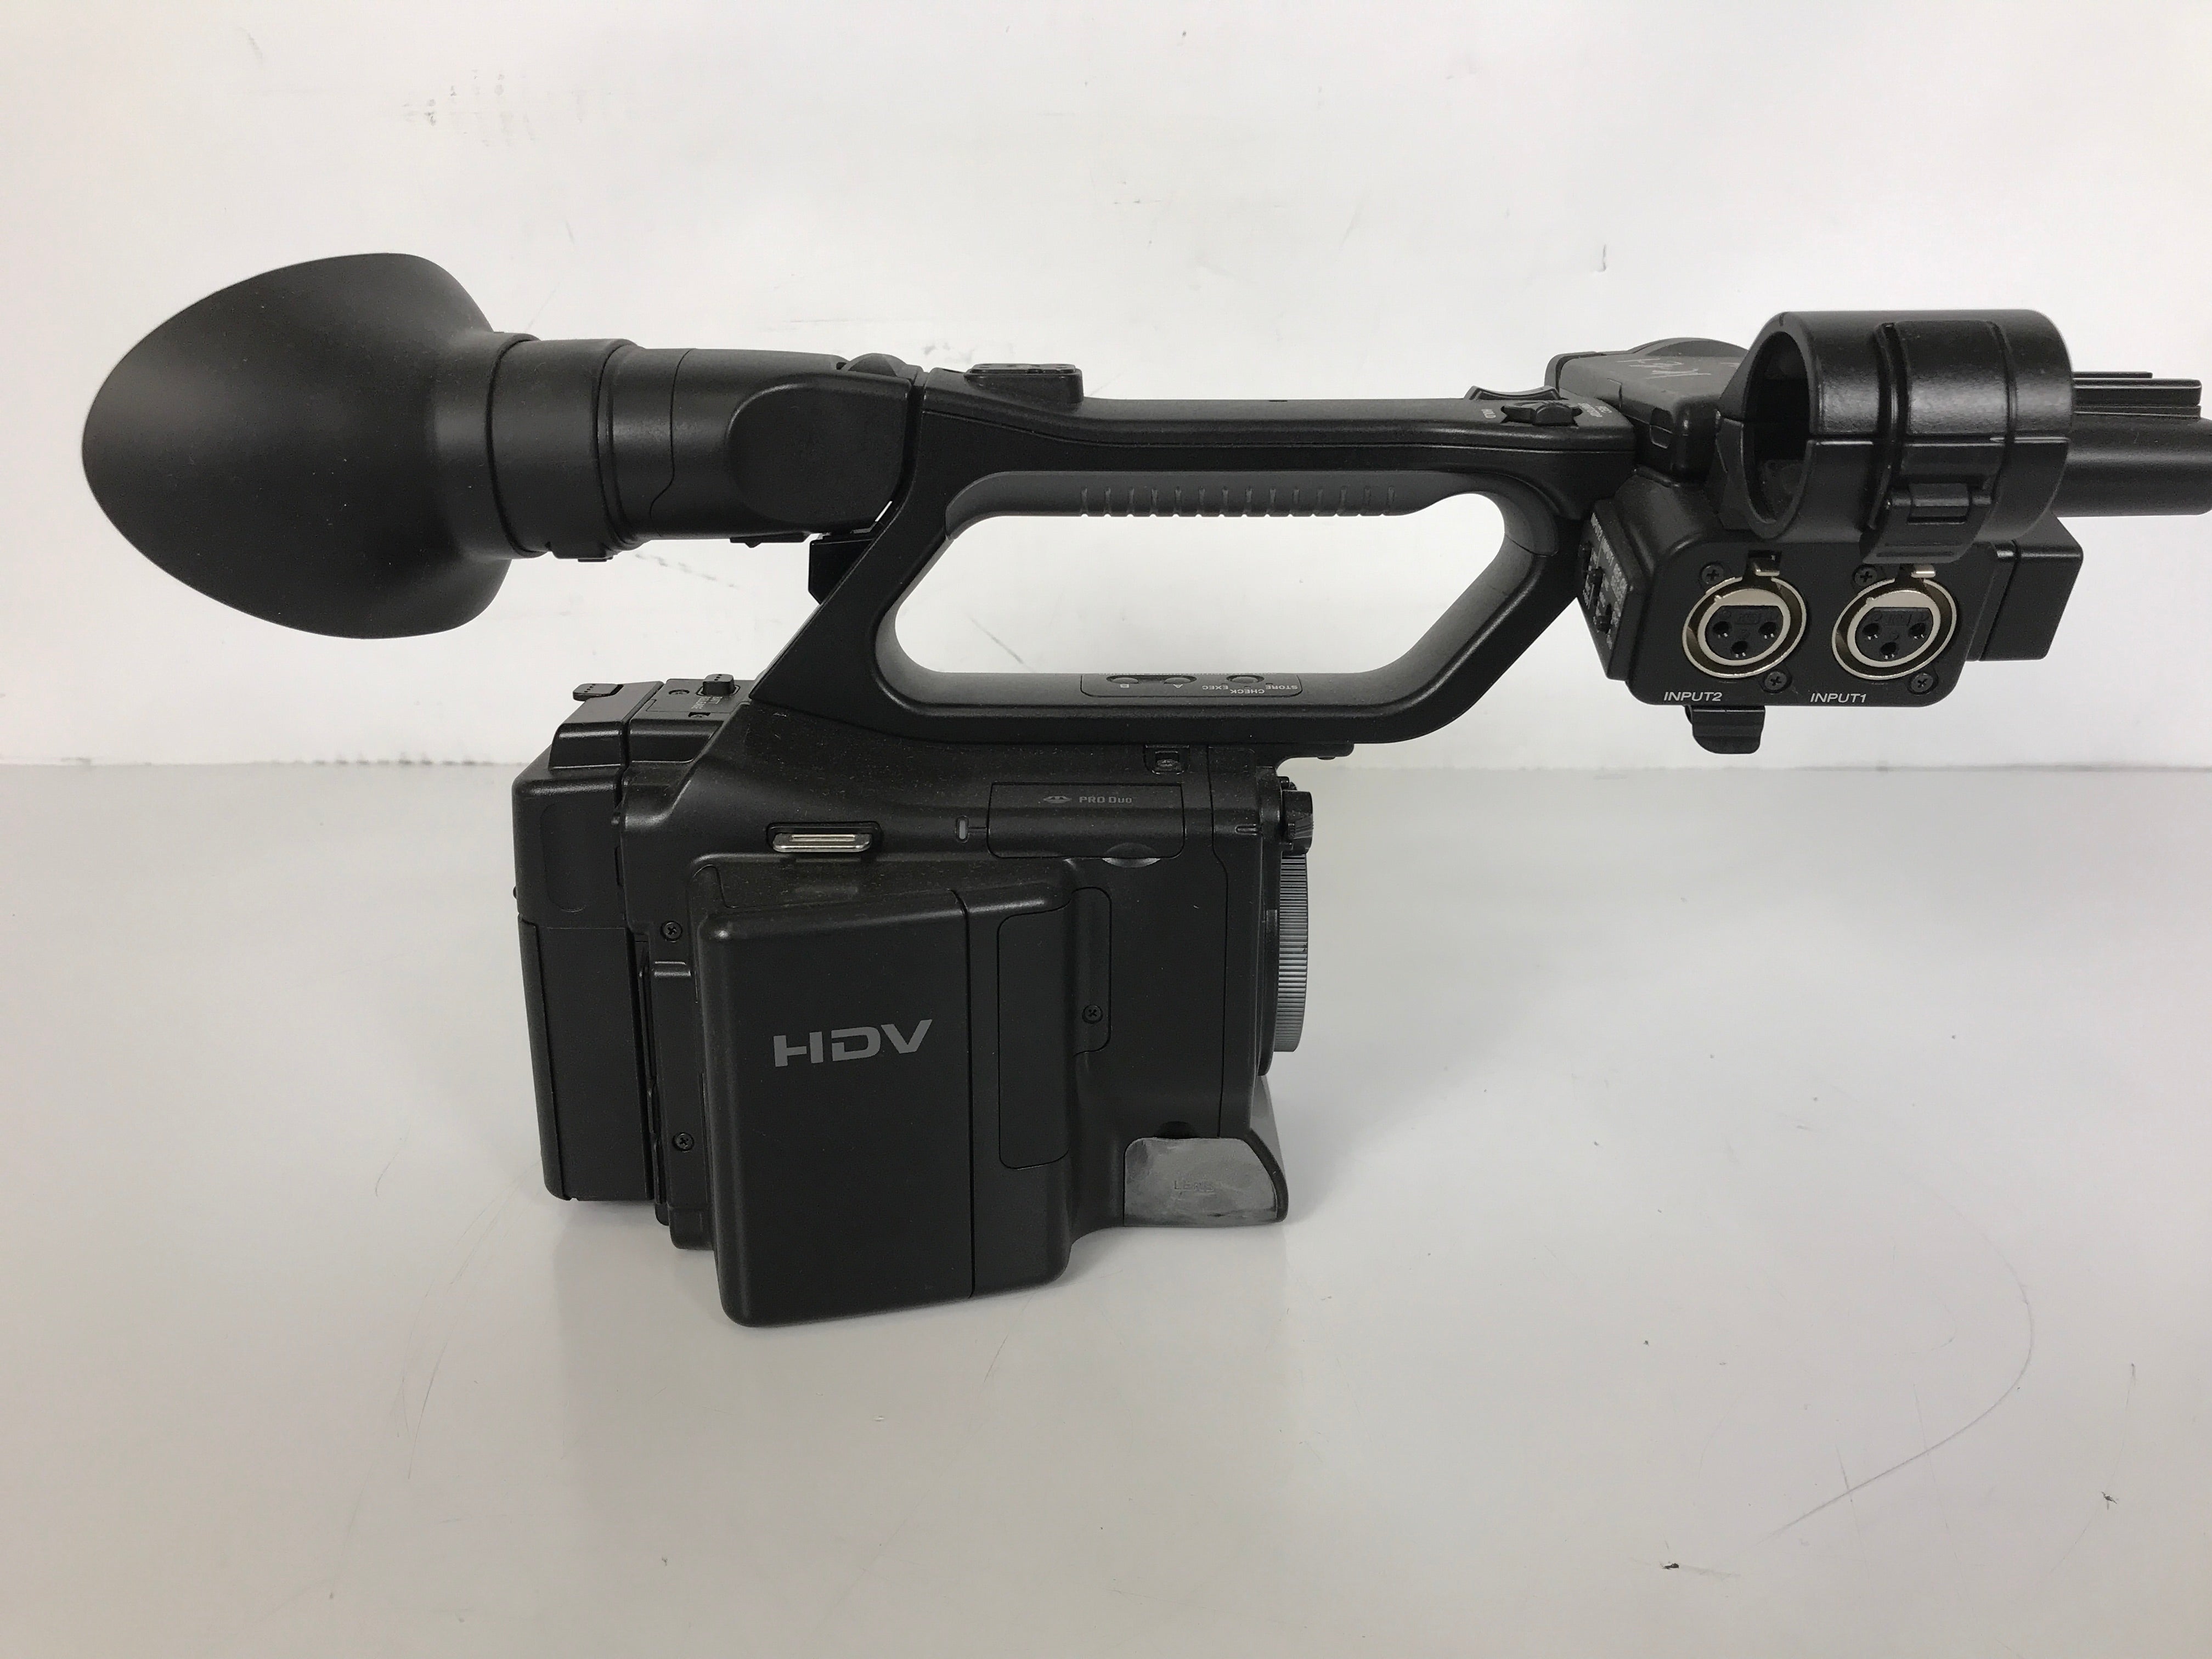 Sony HVR-Z7U HDV Professional Video Camcorder